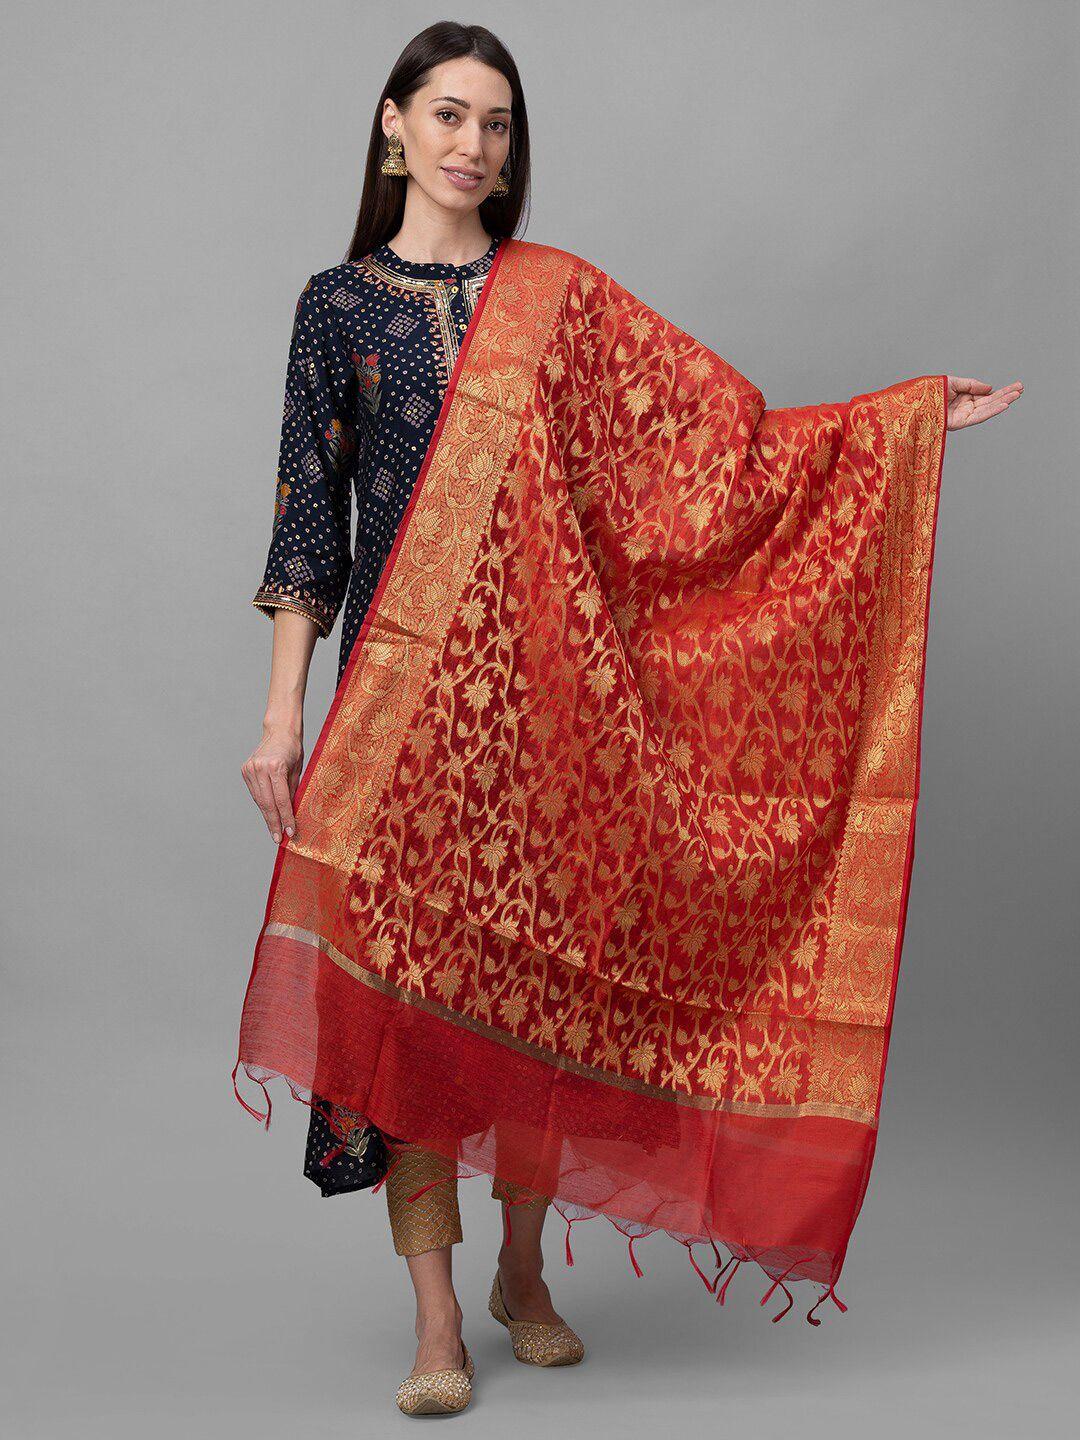 globus red & gold-toned ethnic motifs woven design dupatta with zari